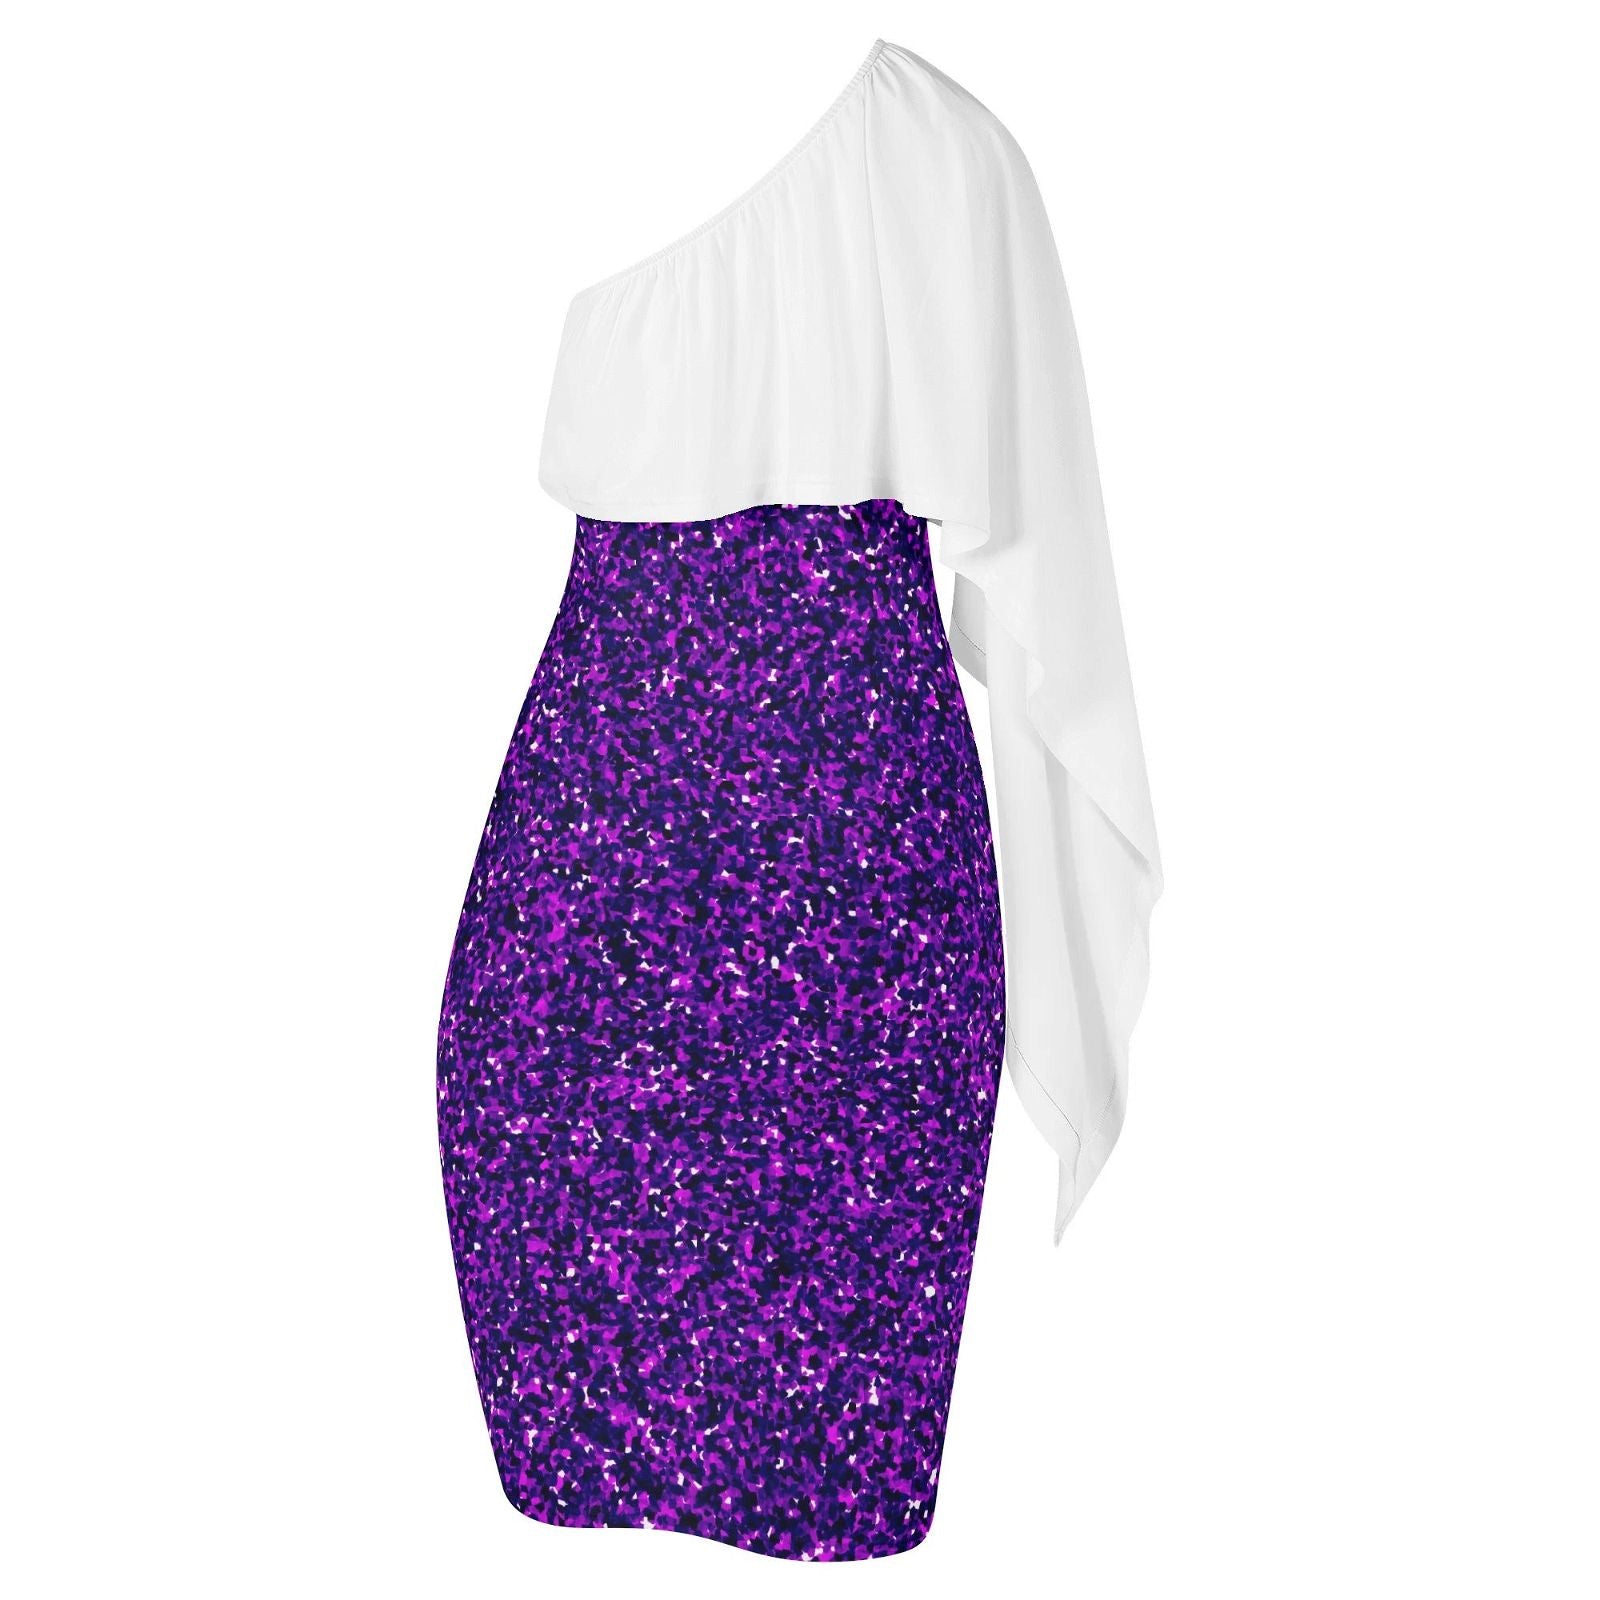 Purple and White Asymmetric Dress - Iron Phoenix GHG